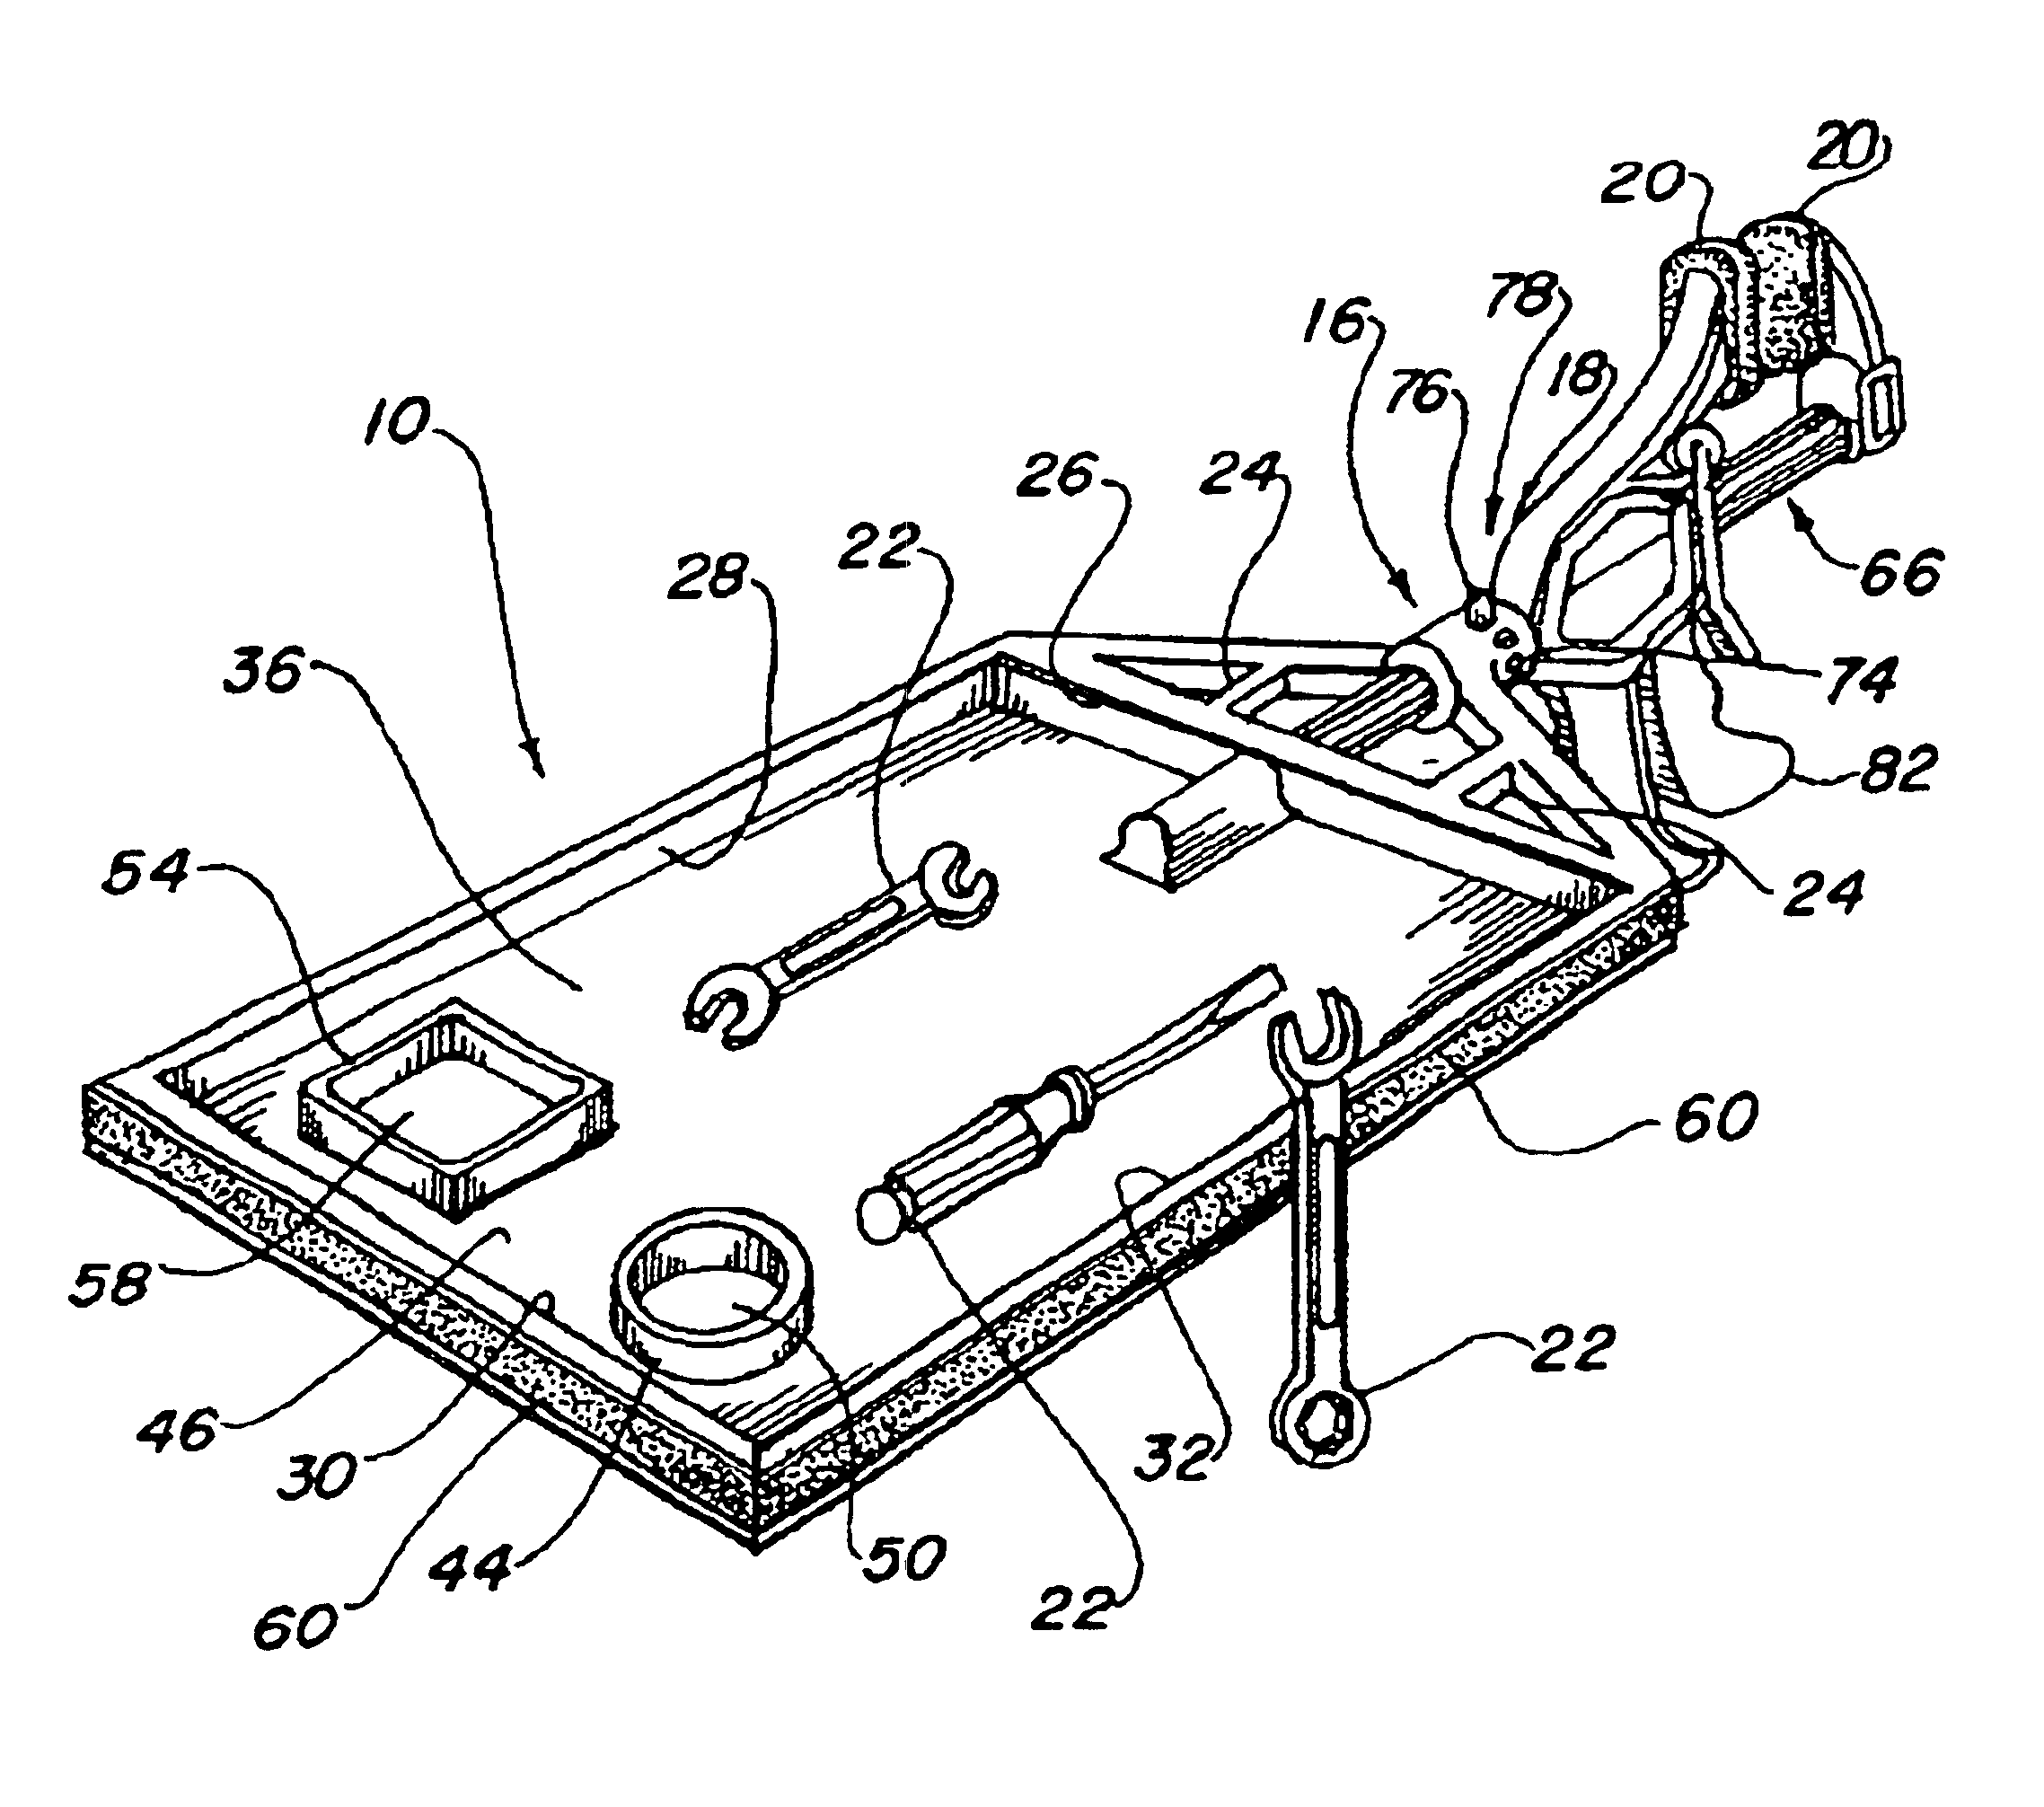 Attachable mechanic's accessory tray